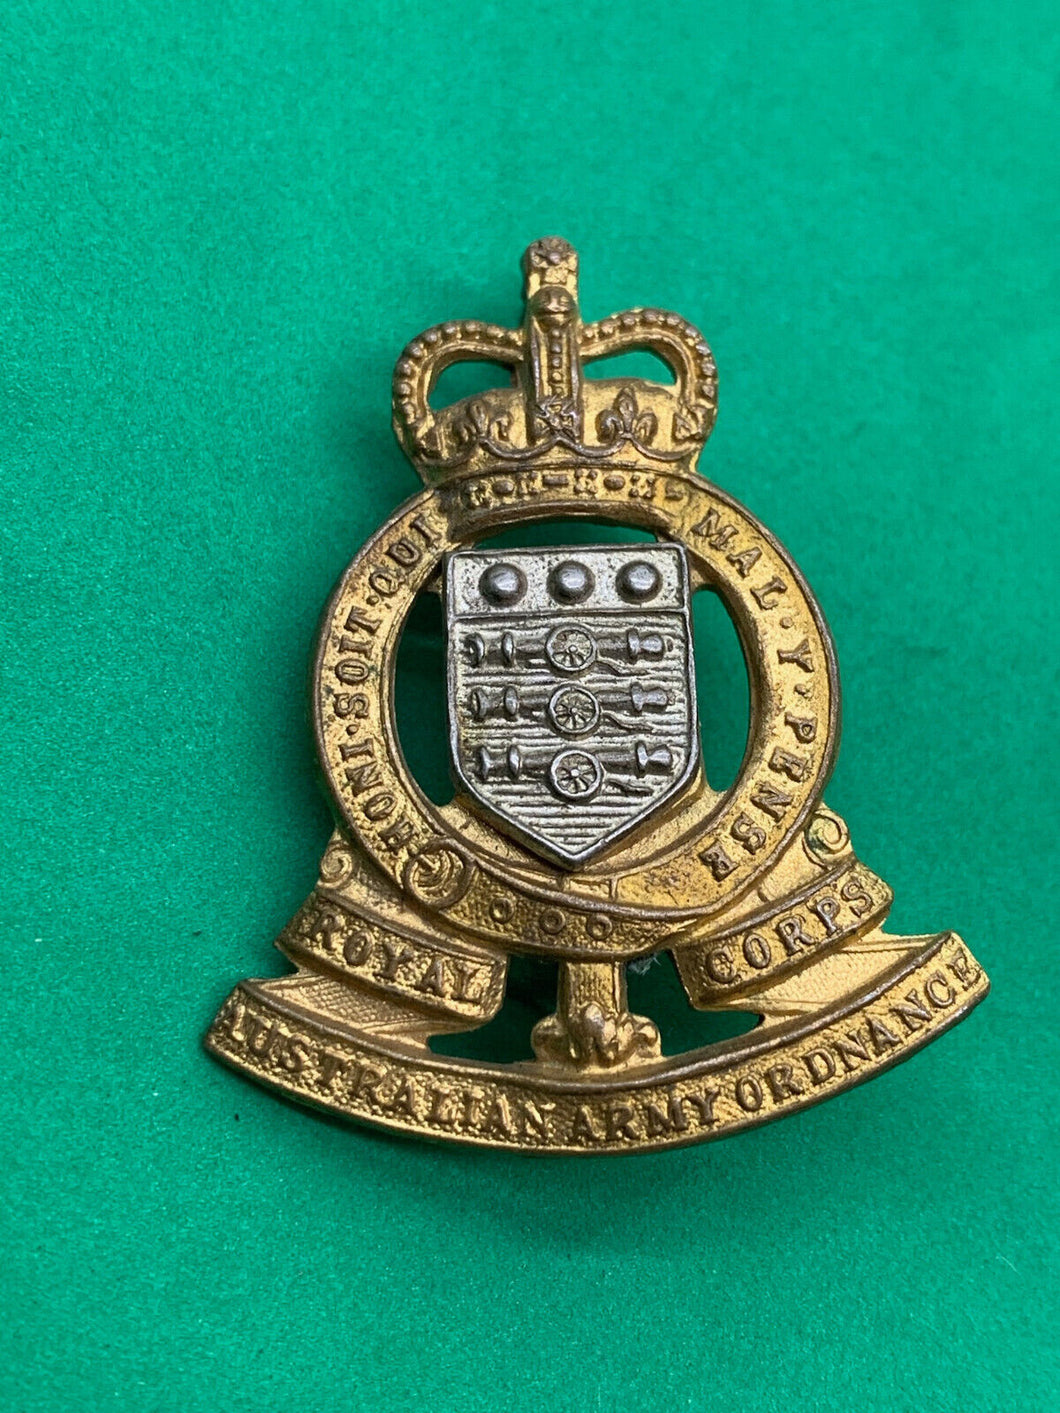 British Army Ordnance Corps Regiment Cap Badge Queens Crown